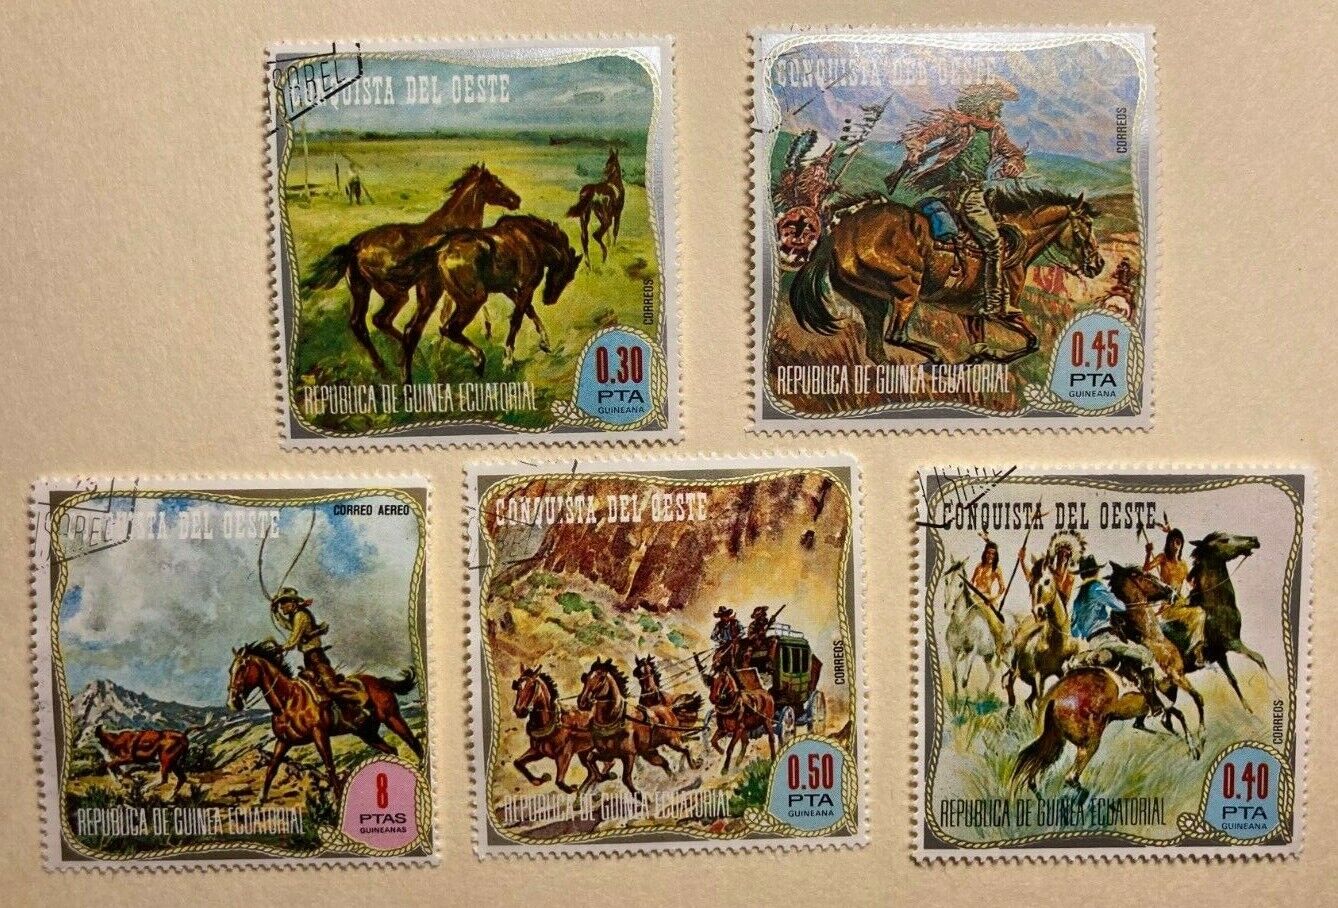 EQUATORIAL GUINEA Stamps: 1974 Conquista Del Oeste "Conquest of the West" Без бренда - фотография #2